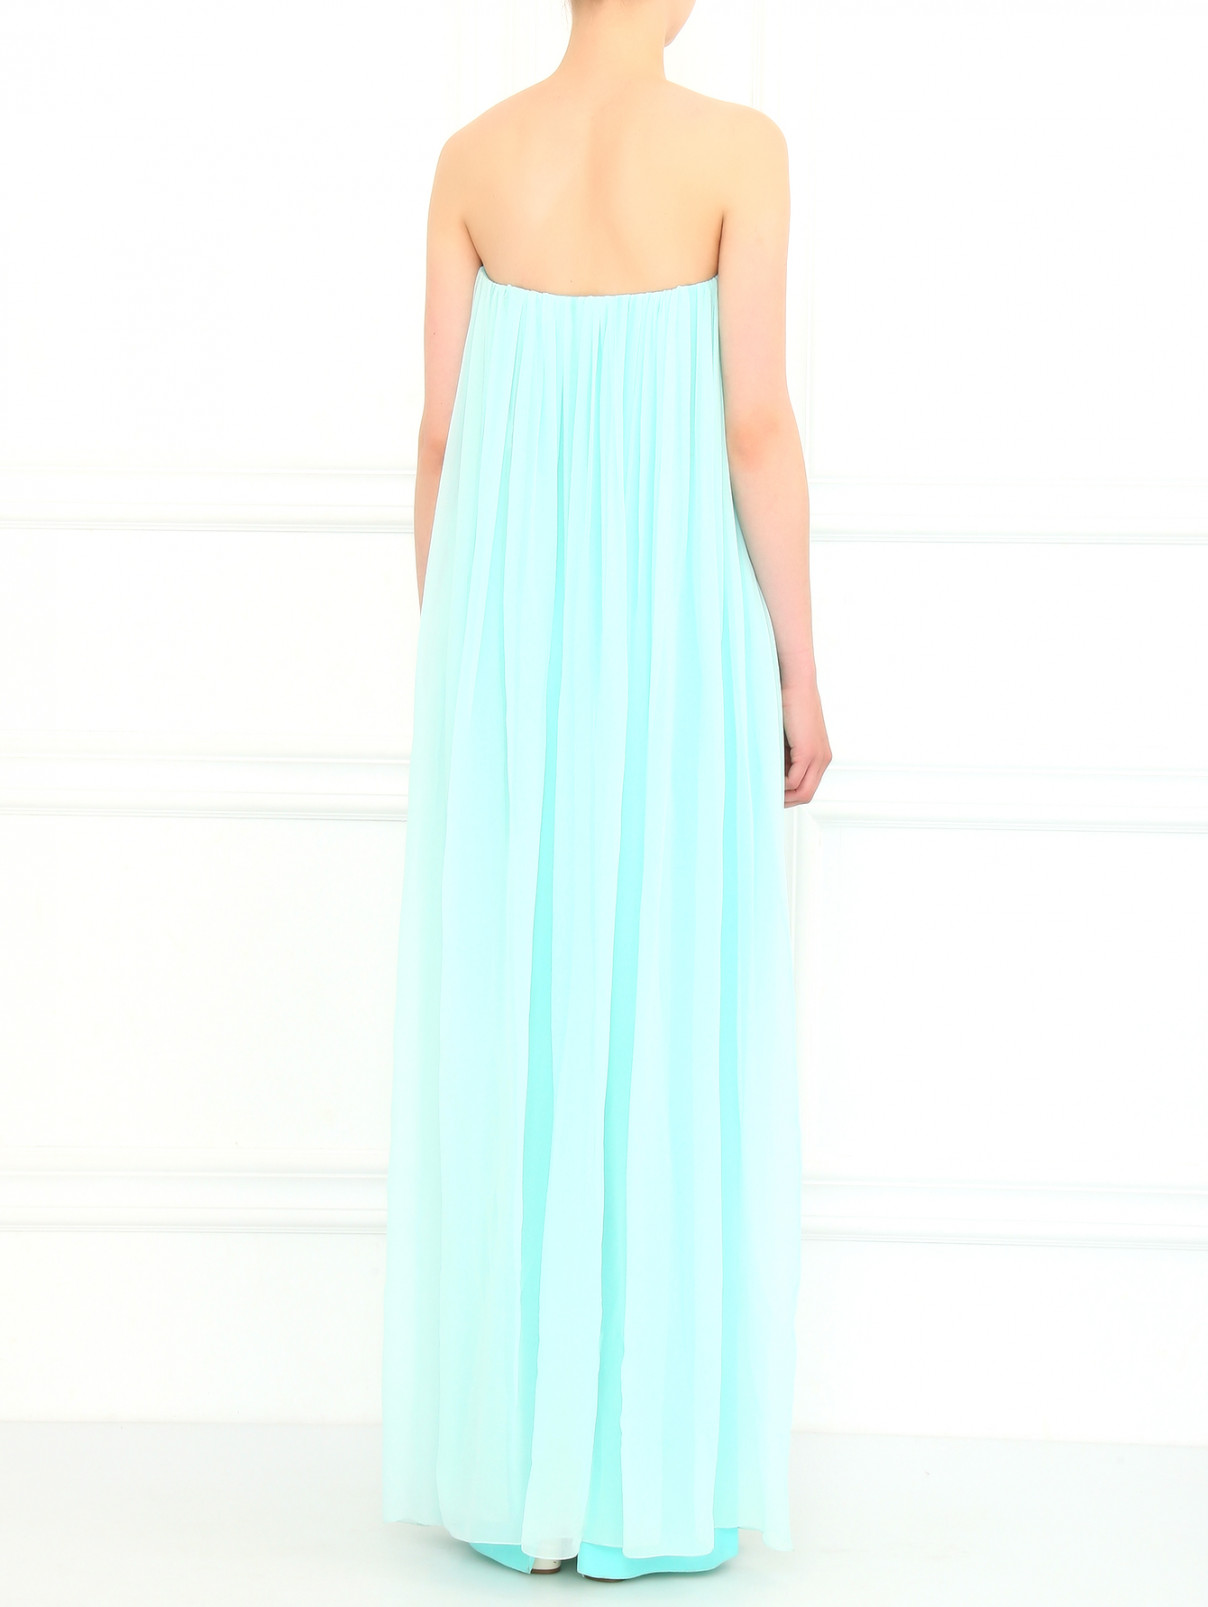 Платье-макси из шелка Kira Plastinina  –  Модель Верх-Низ1  – Цвет:  Синий